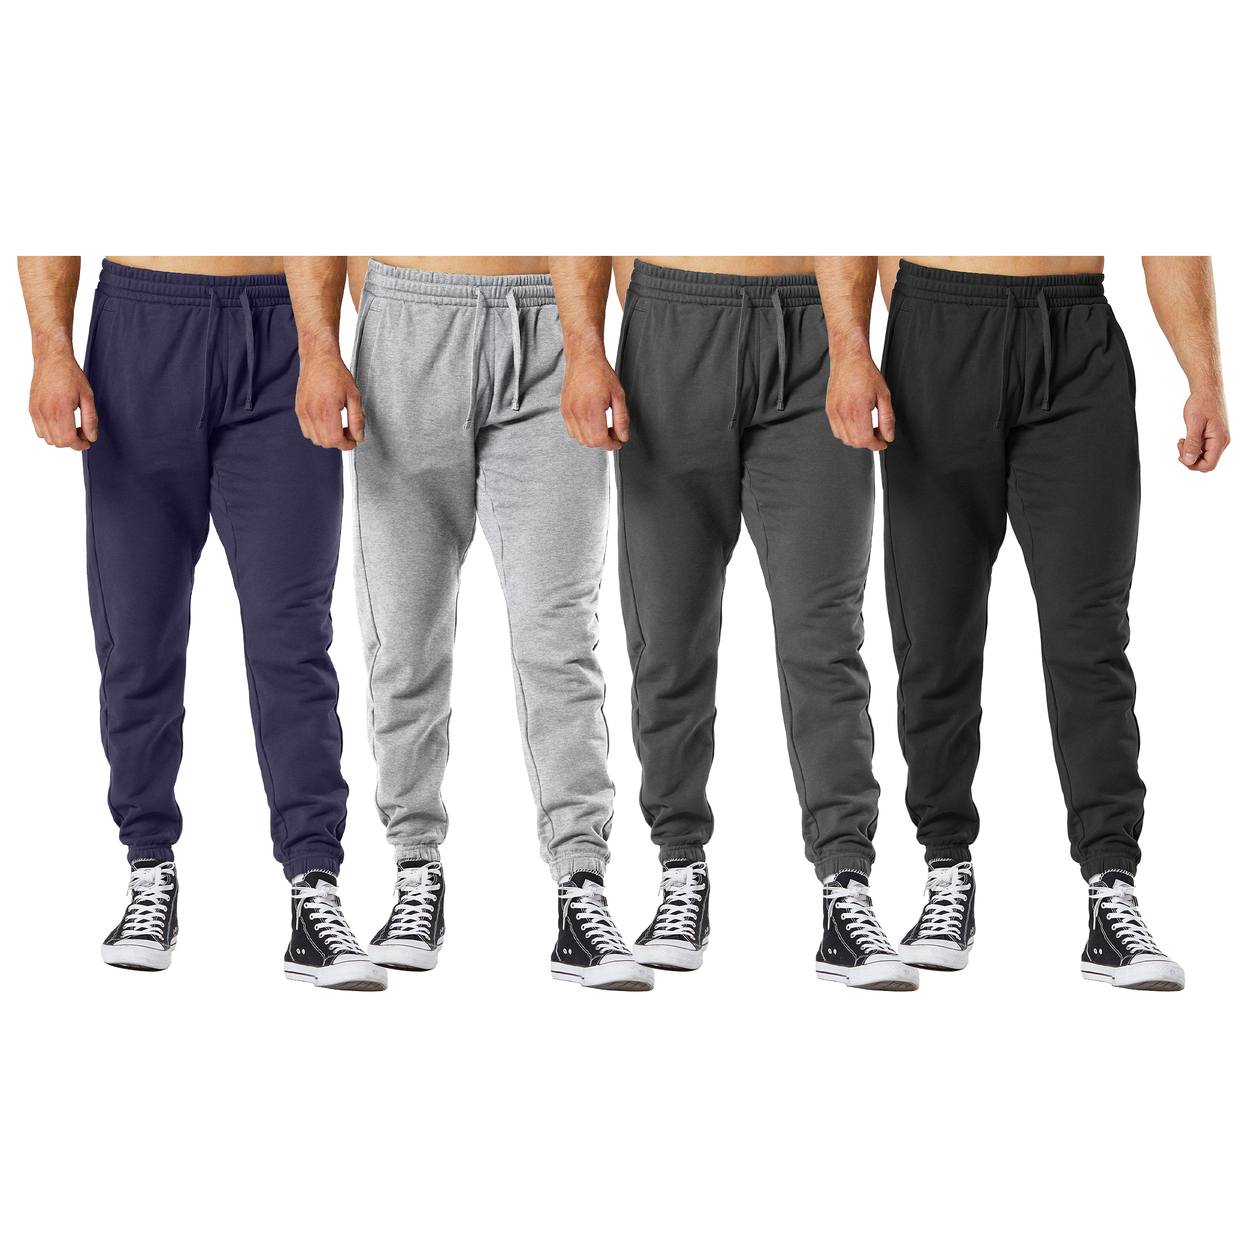 Men's Ultra-Soft Cozy Winter Warm Casual Fleece Lined Sweatpants Jogger - Charcoal, Xx-large